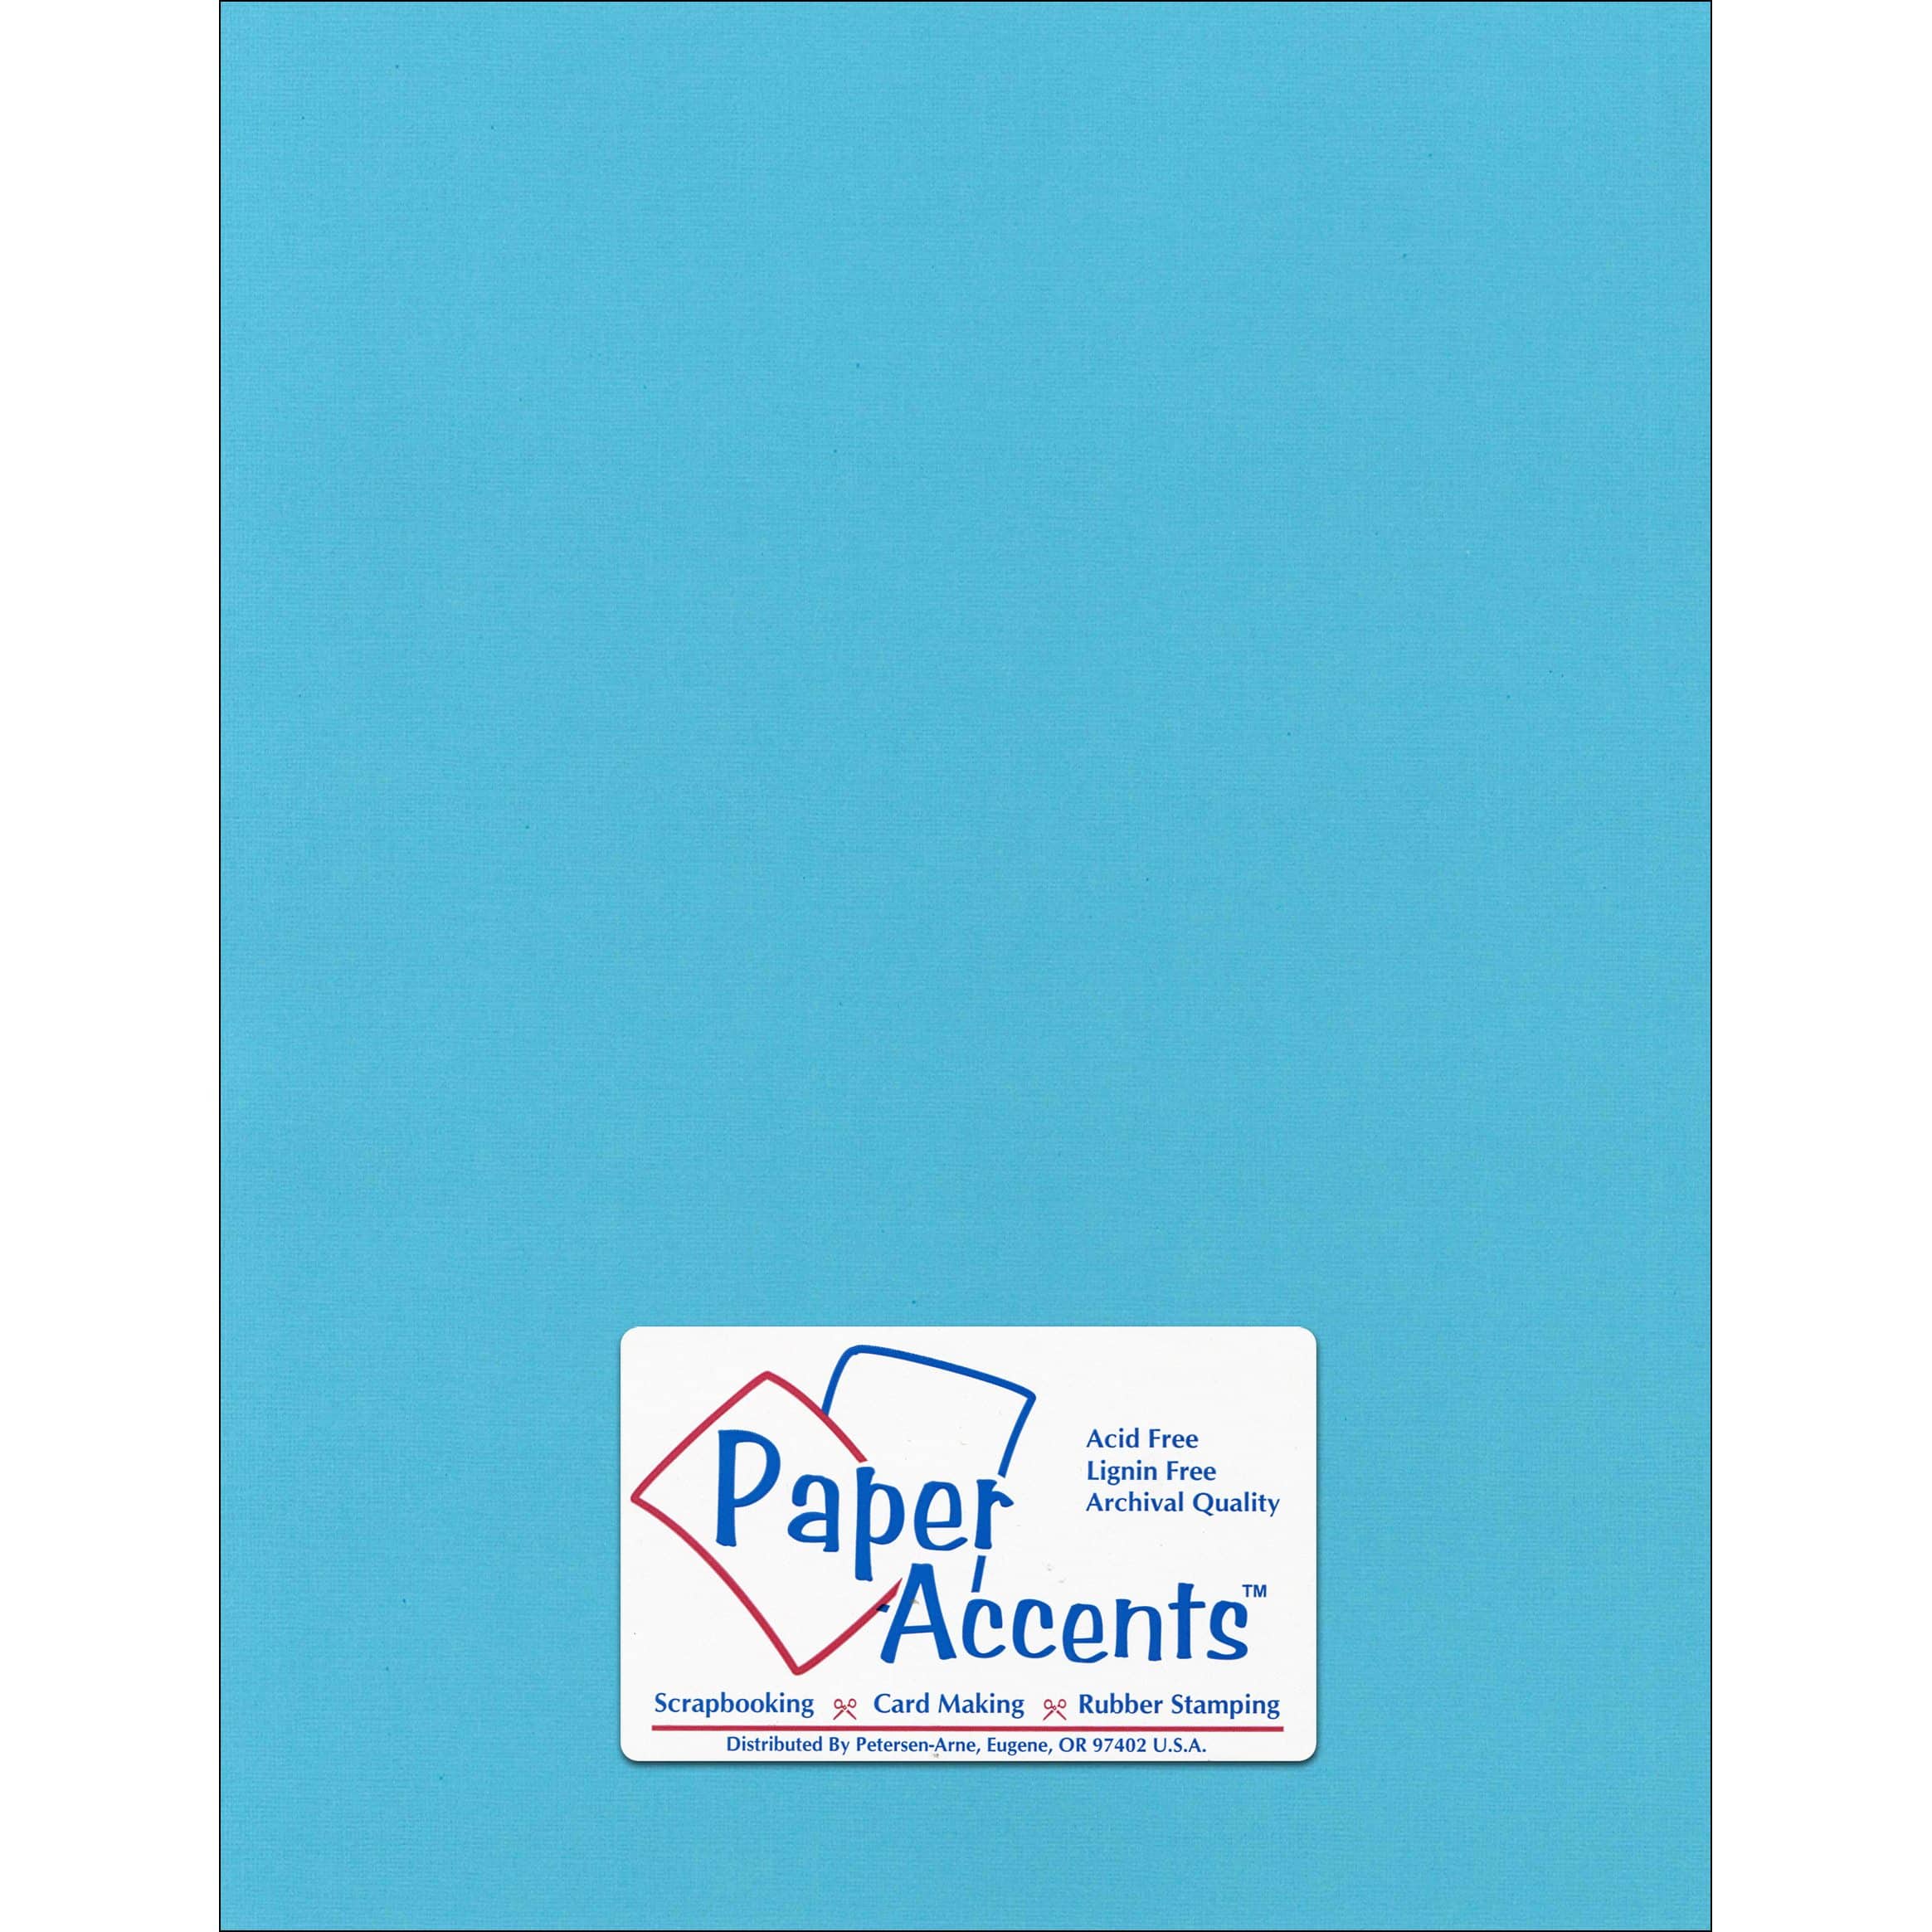 PA Paper™ Accents 8.5 x 11 80lb. Canvas Cardstock Paper, 25 Sheets, Michaels